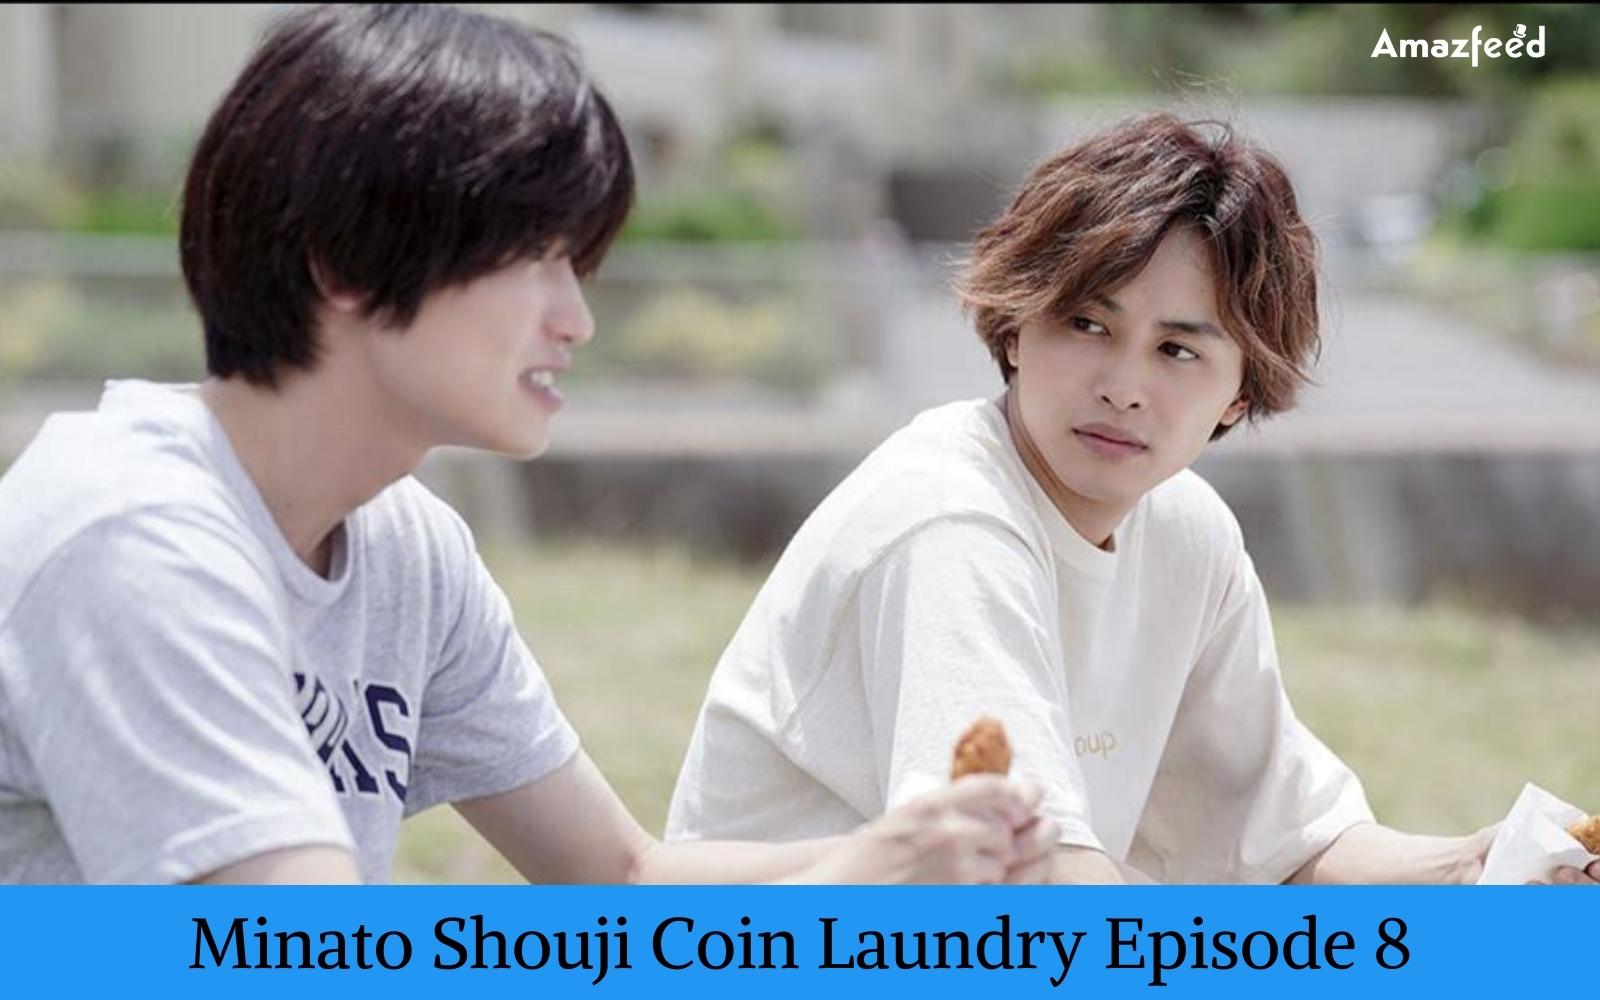 Minato Shouji Coin Laundry Episode 8 ⇒ Countdown, Release Date, Spoilers, Recap, Cast & News Updates